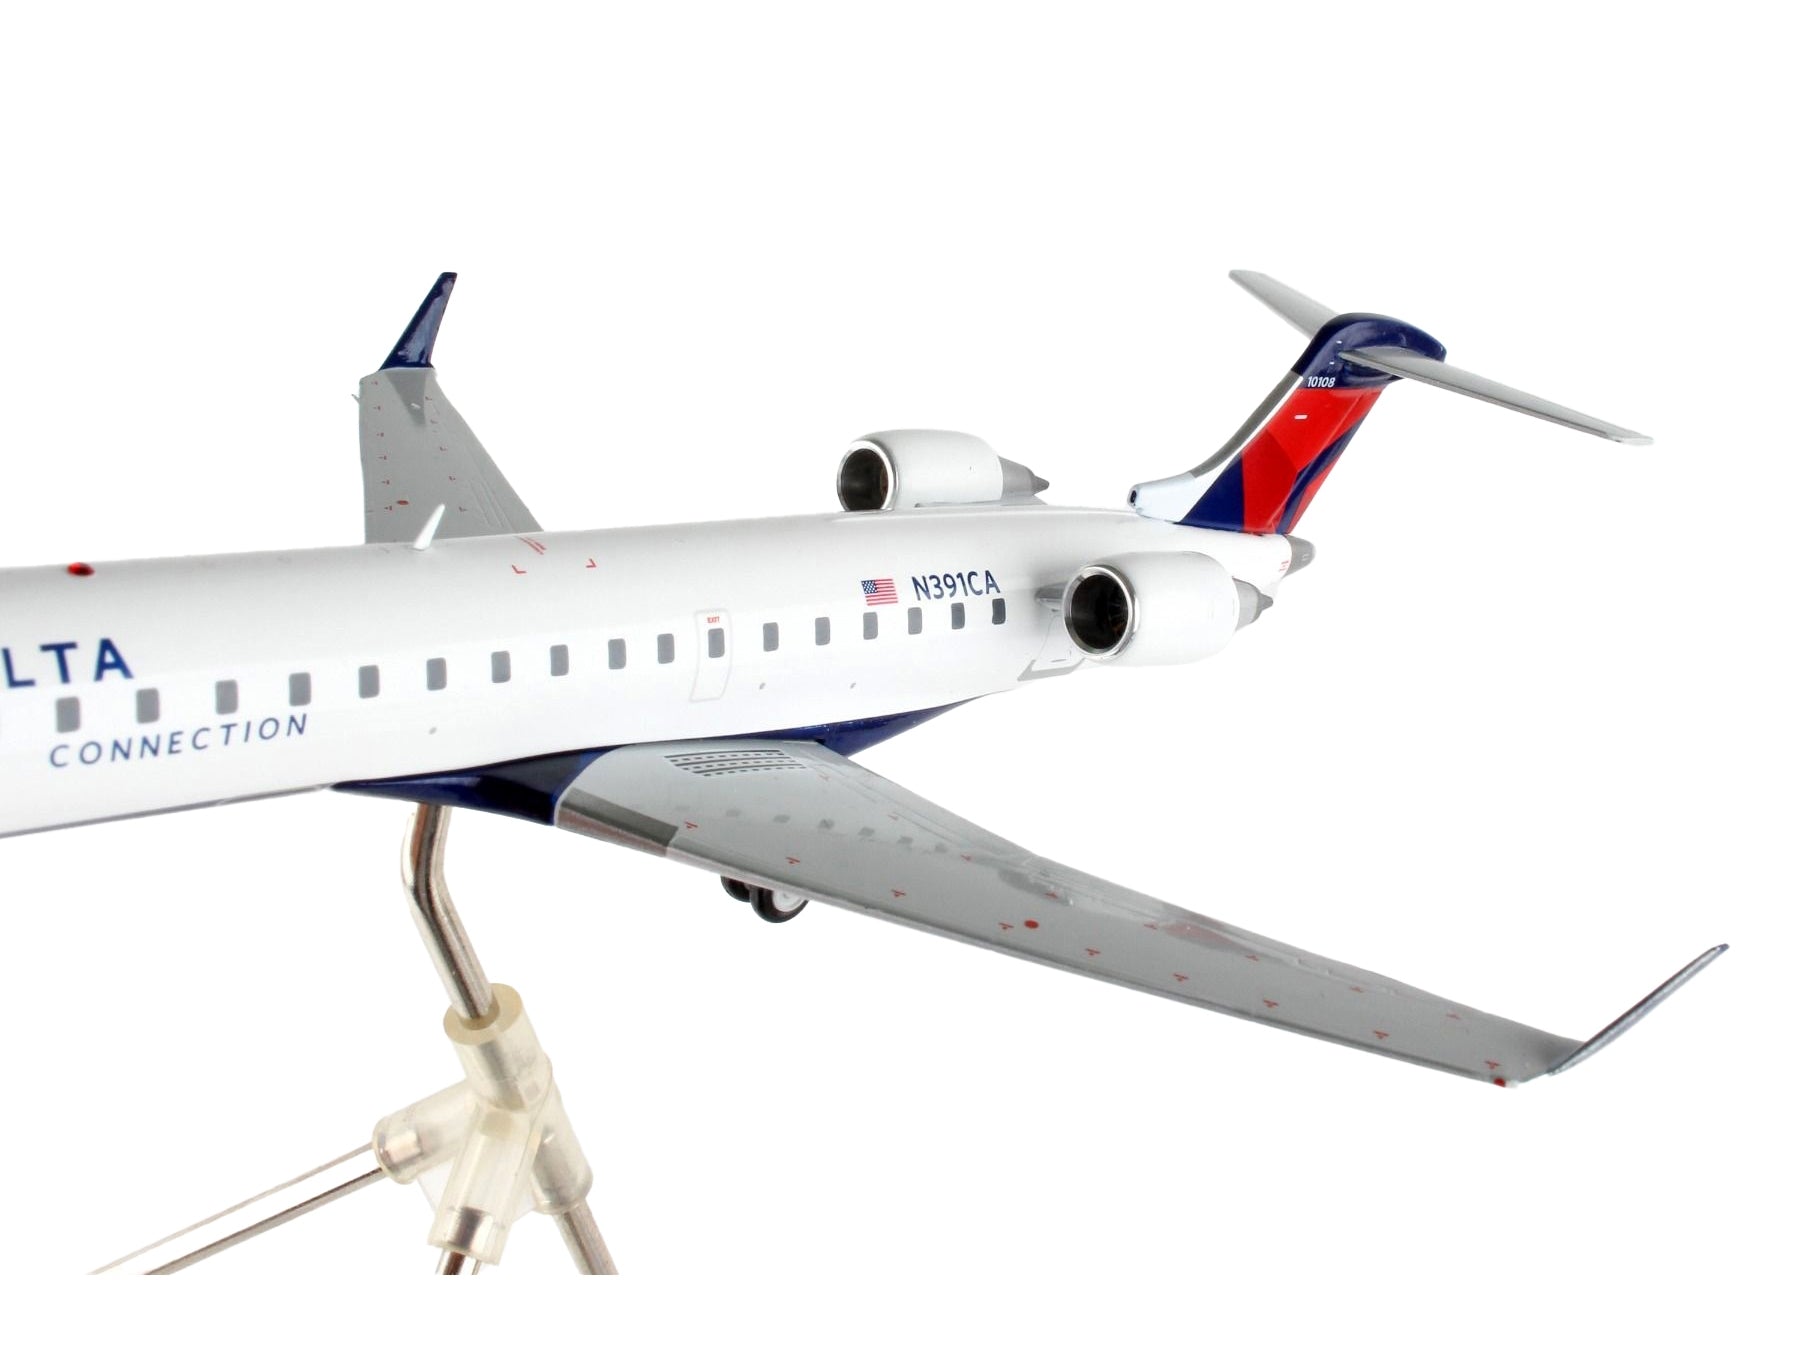 Bombardier CRJ700 Commercial Aircraft "Delta Air Lines - Delta Connection"